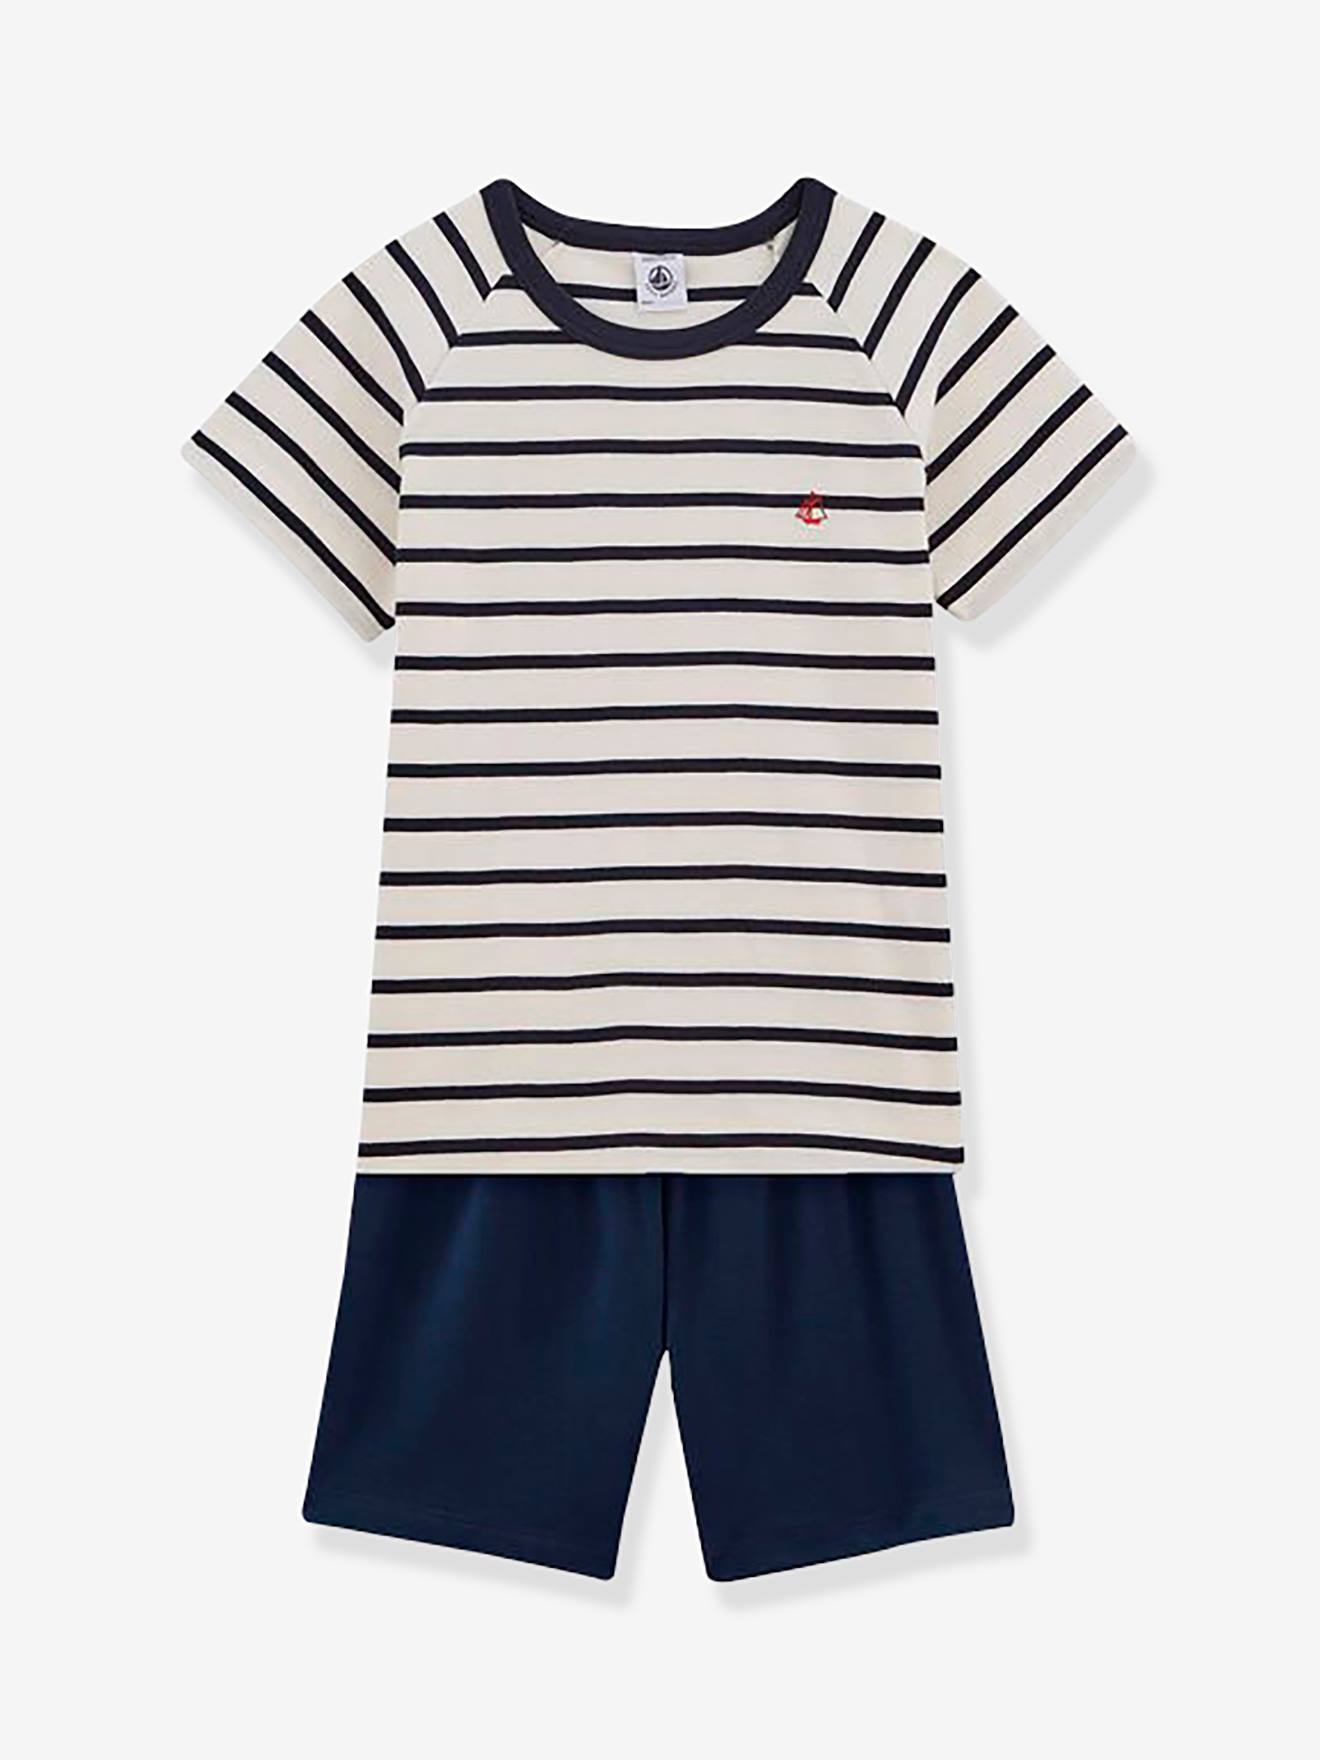 Striped Cotton Pyjamas for Boys - Petit Bateau blue dark striped